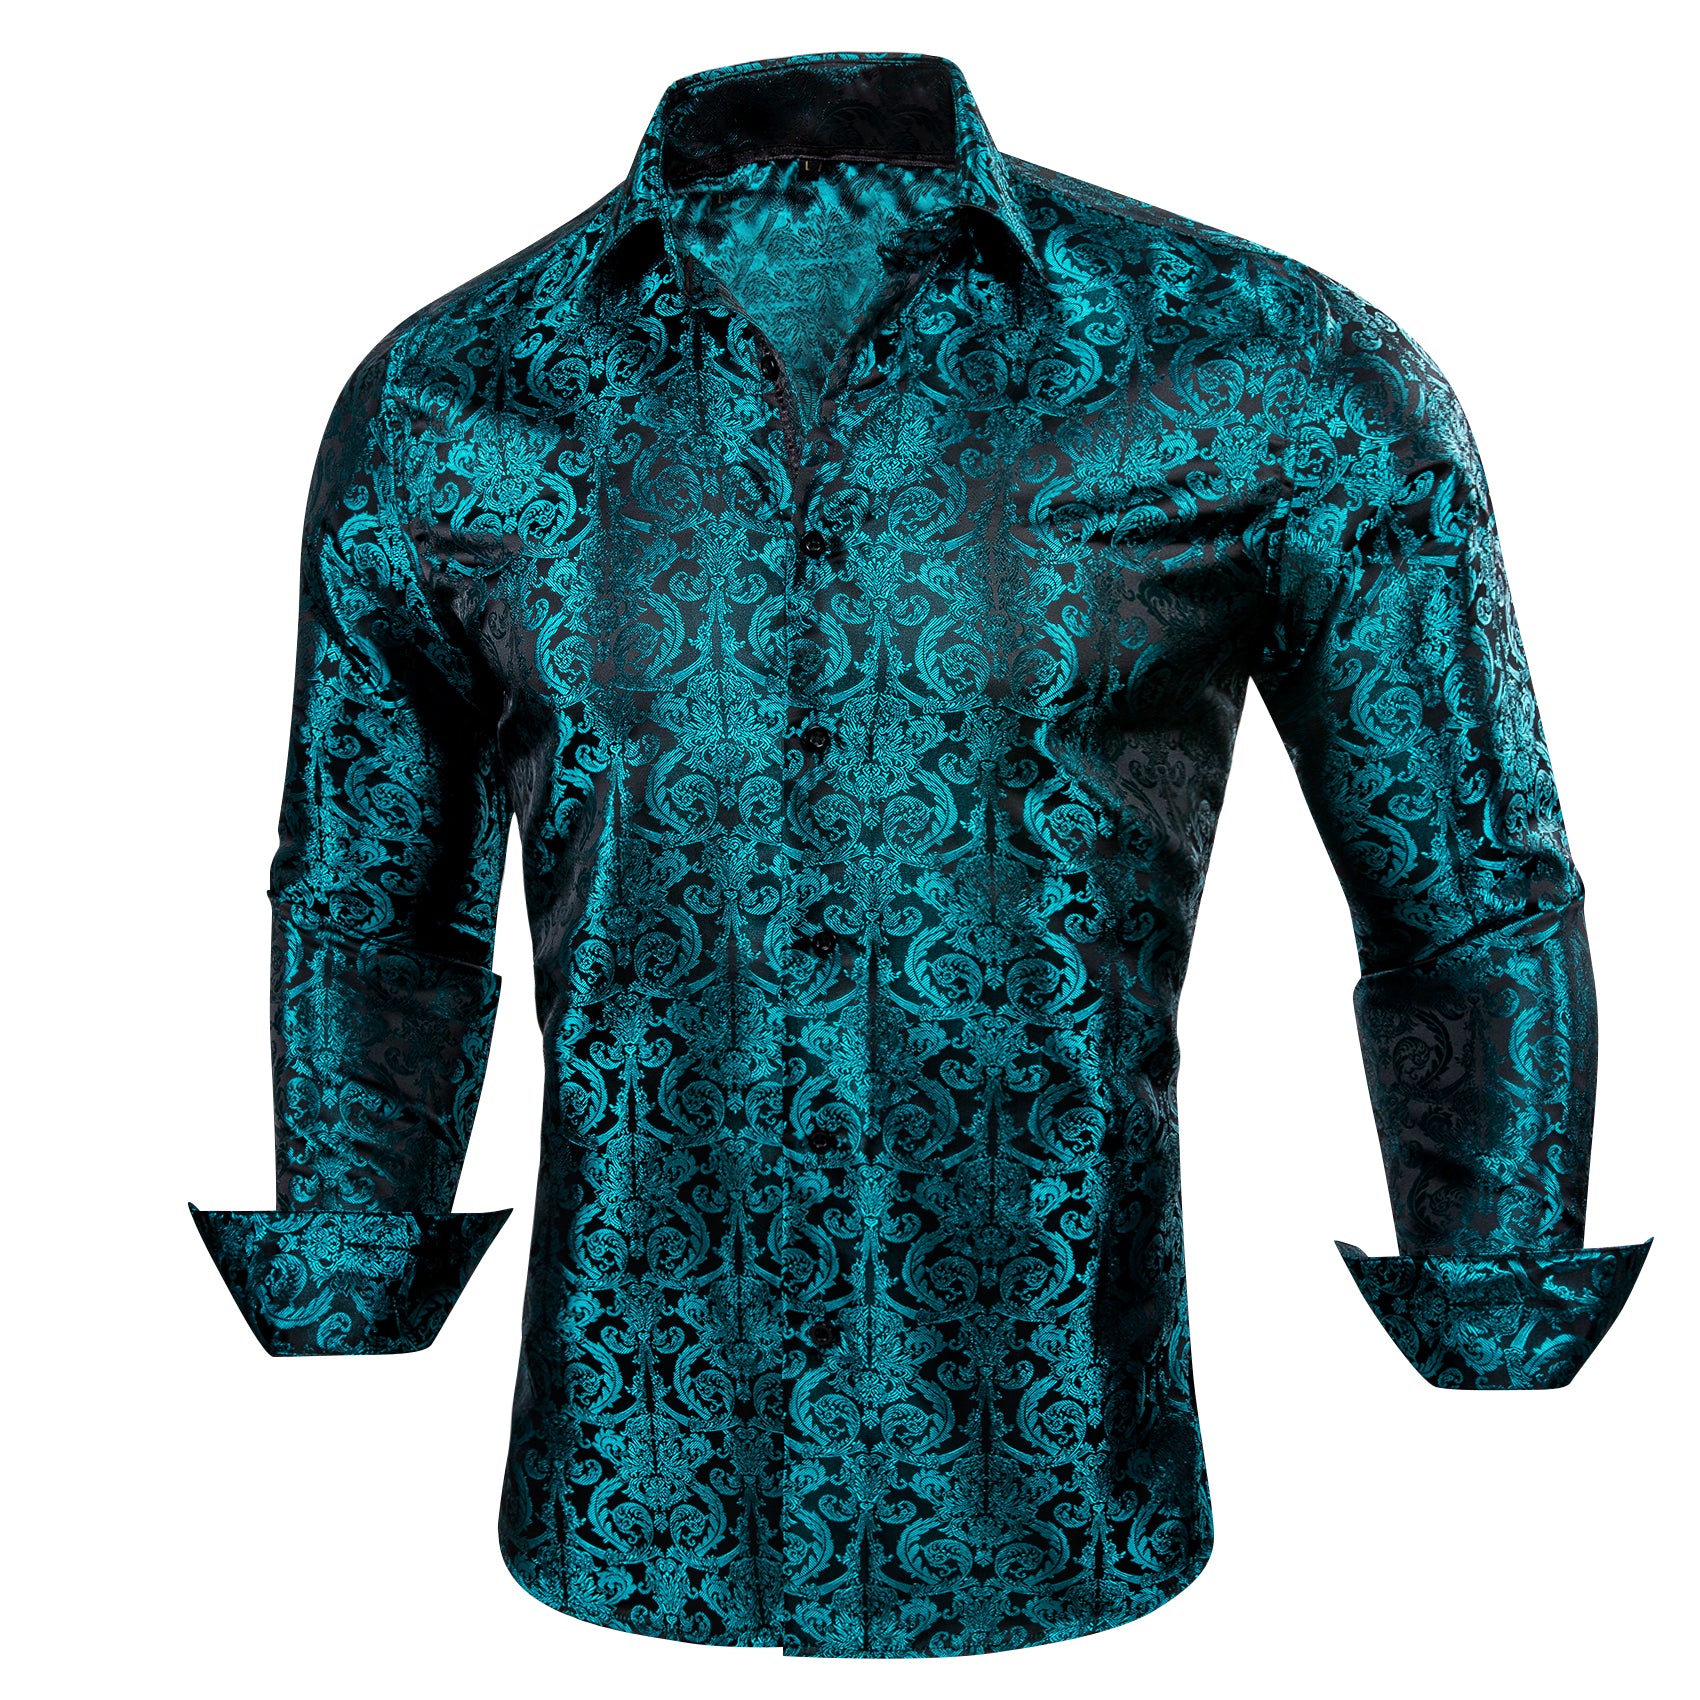 Barry.wang Luxury Blue Paisley Silk Shirt